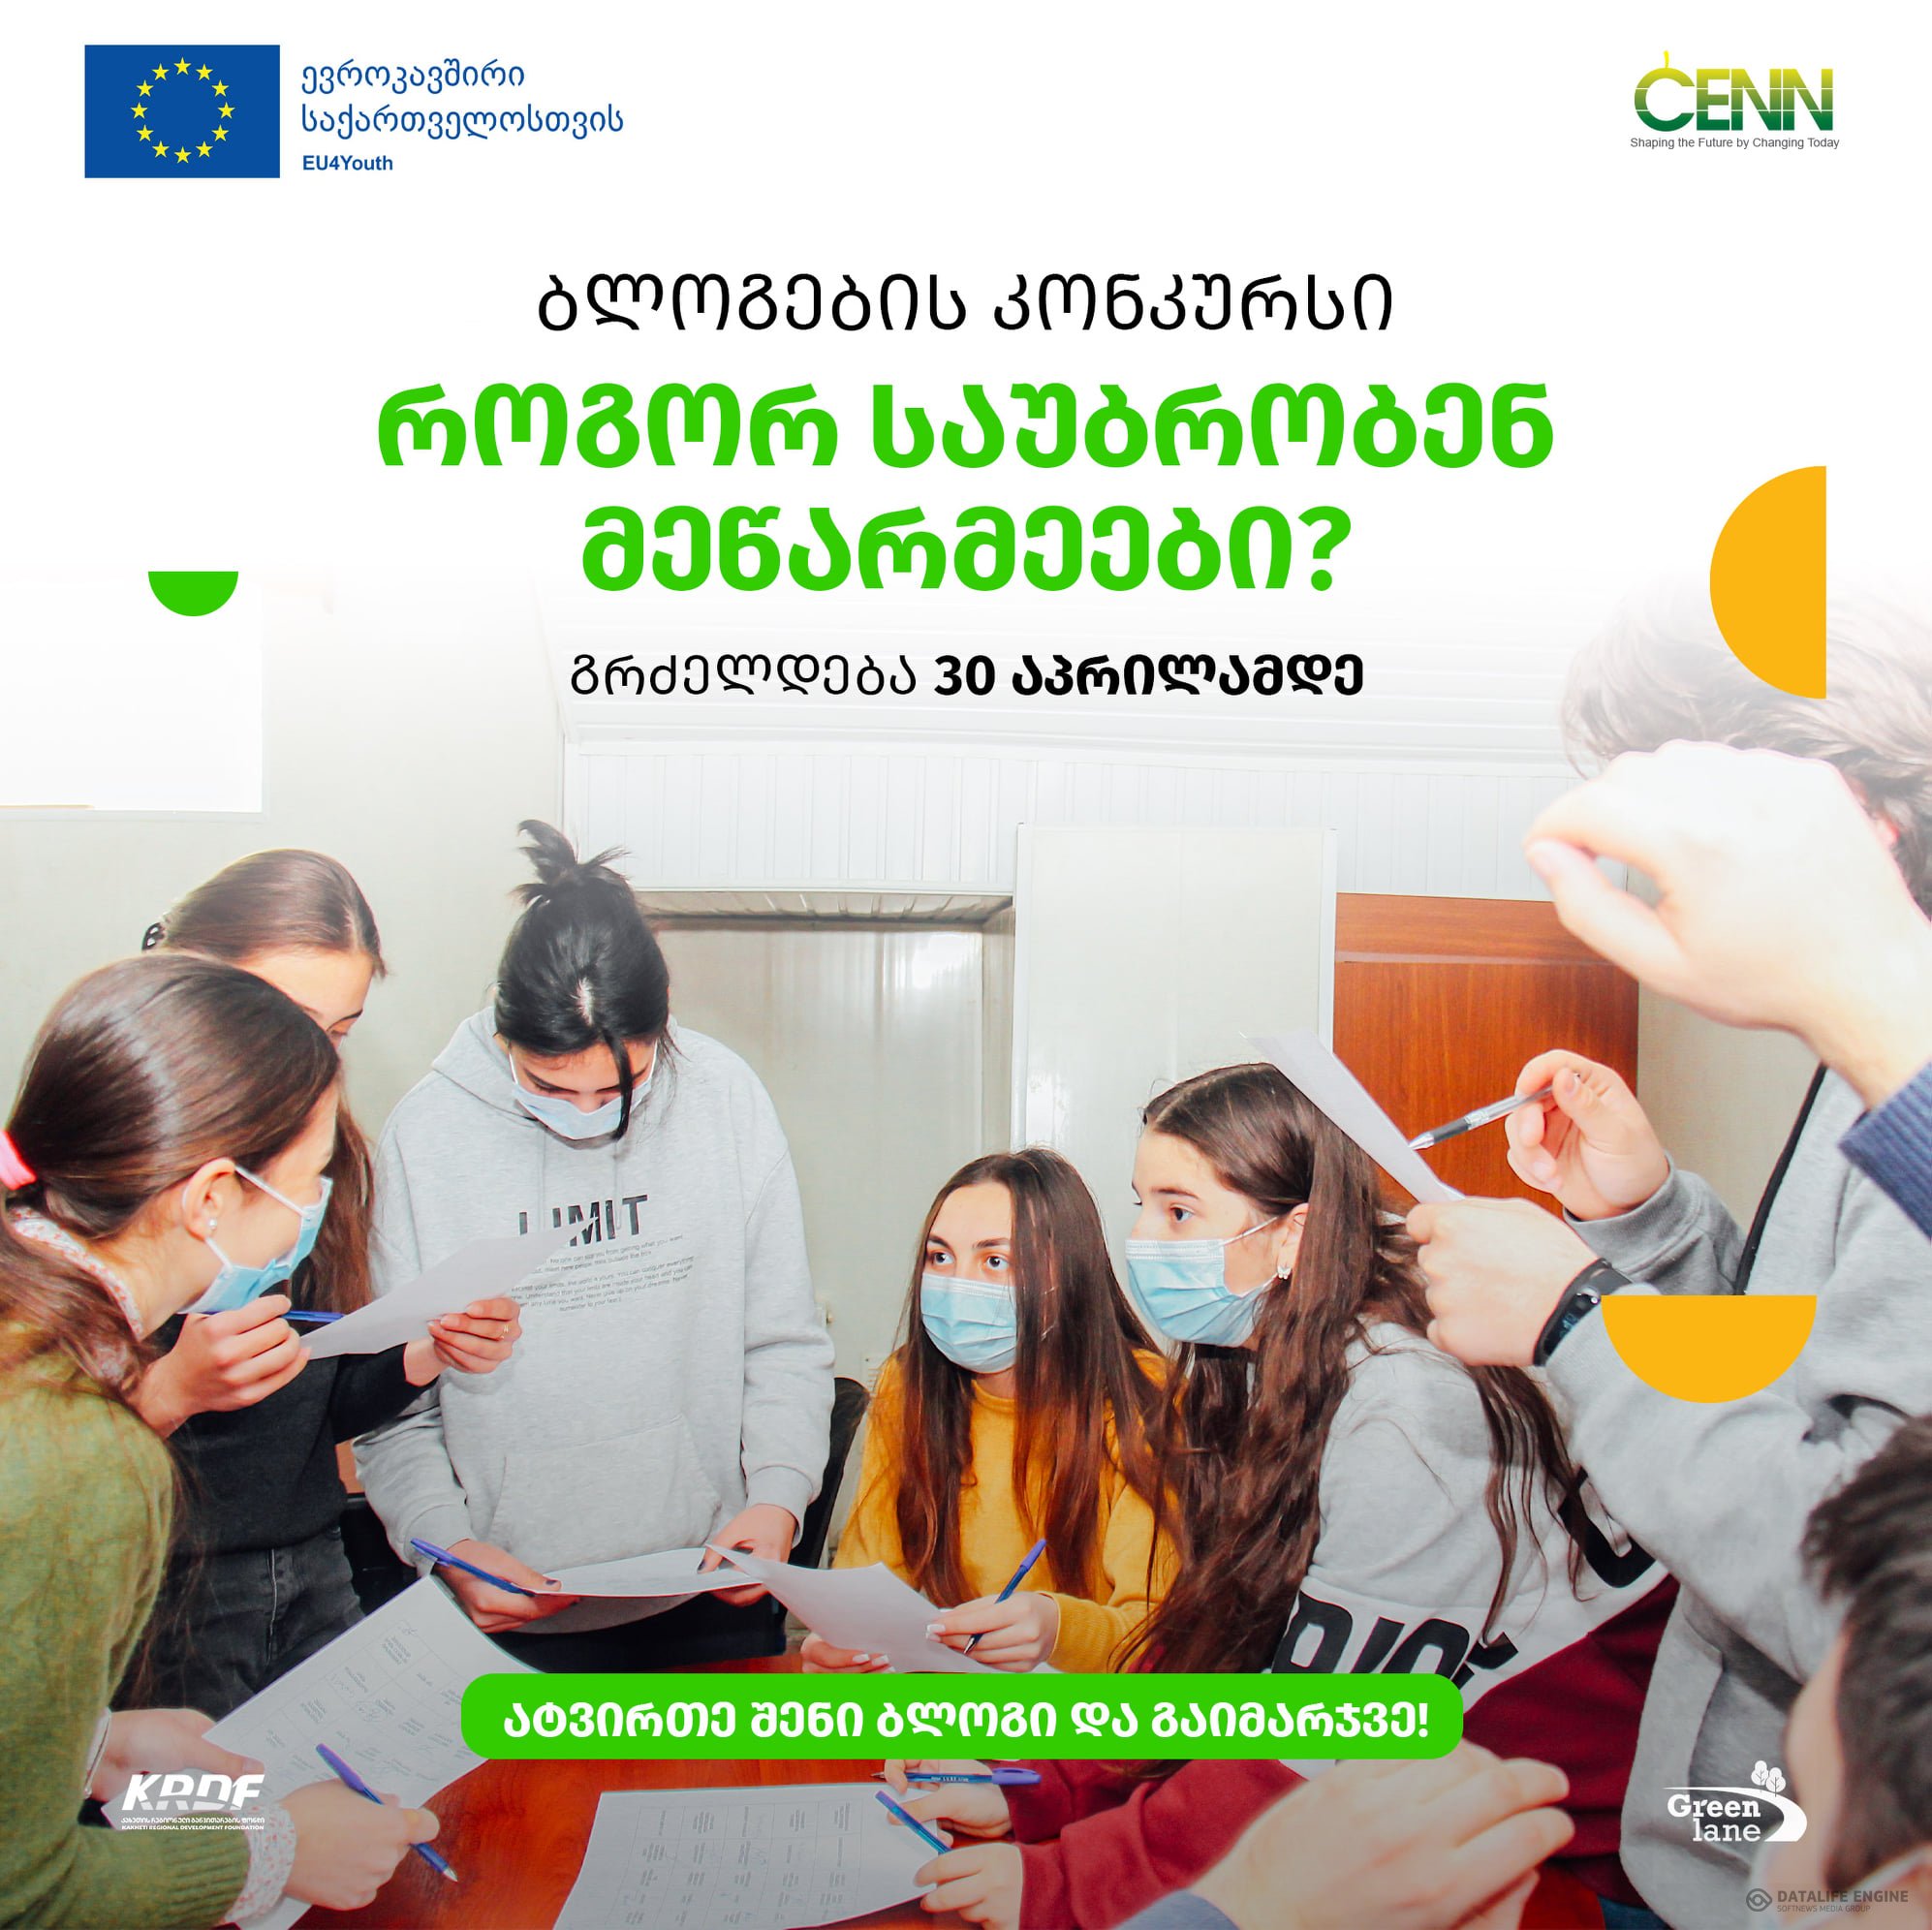 CENN აცხადებს 9 თვიან ბლოგების კონკურსს თემაზე - სოციალური და მწვანე მეწარმეობა.